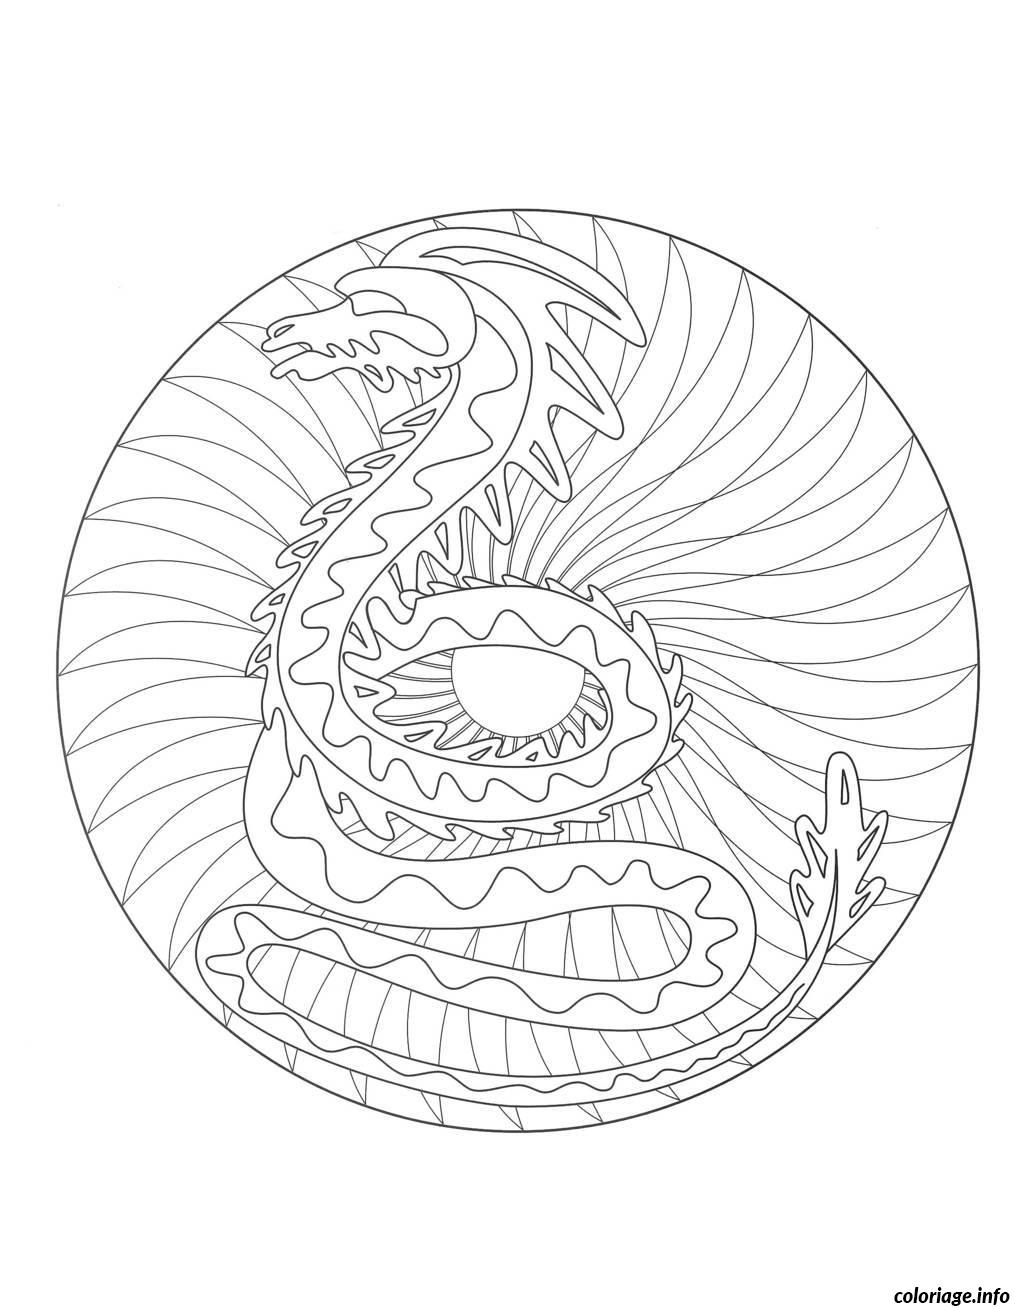 Dessin coloring mandala dragon 2  Coloriage Gratuit à Imprimer